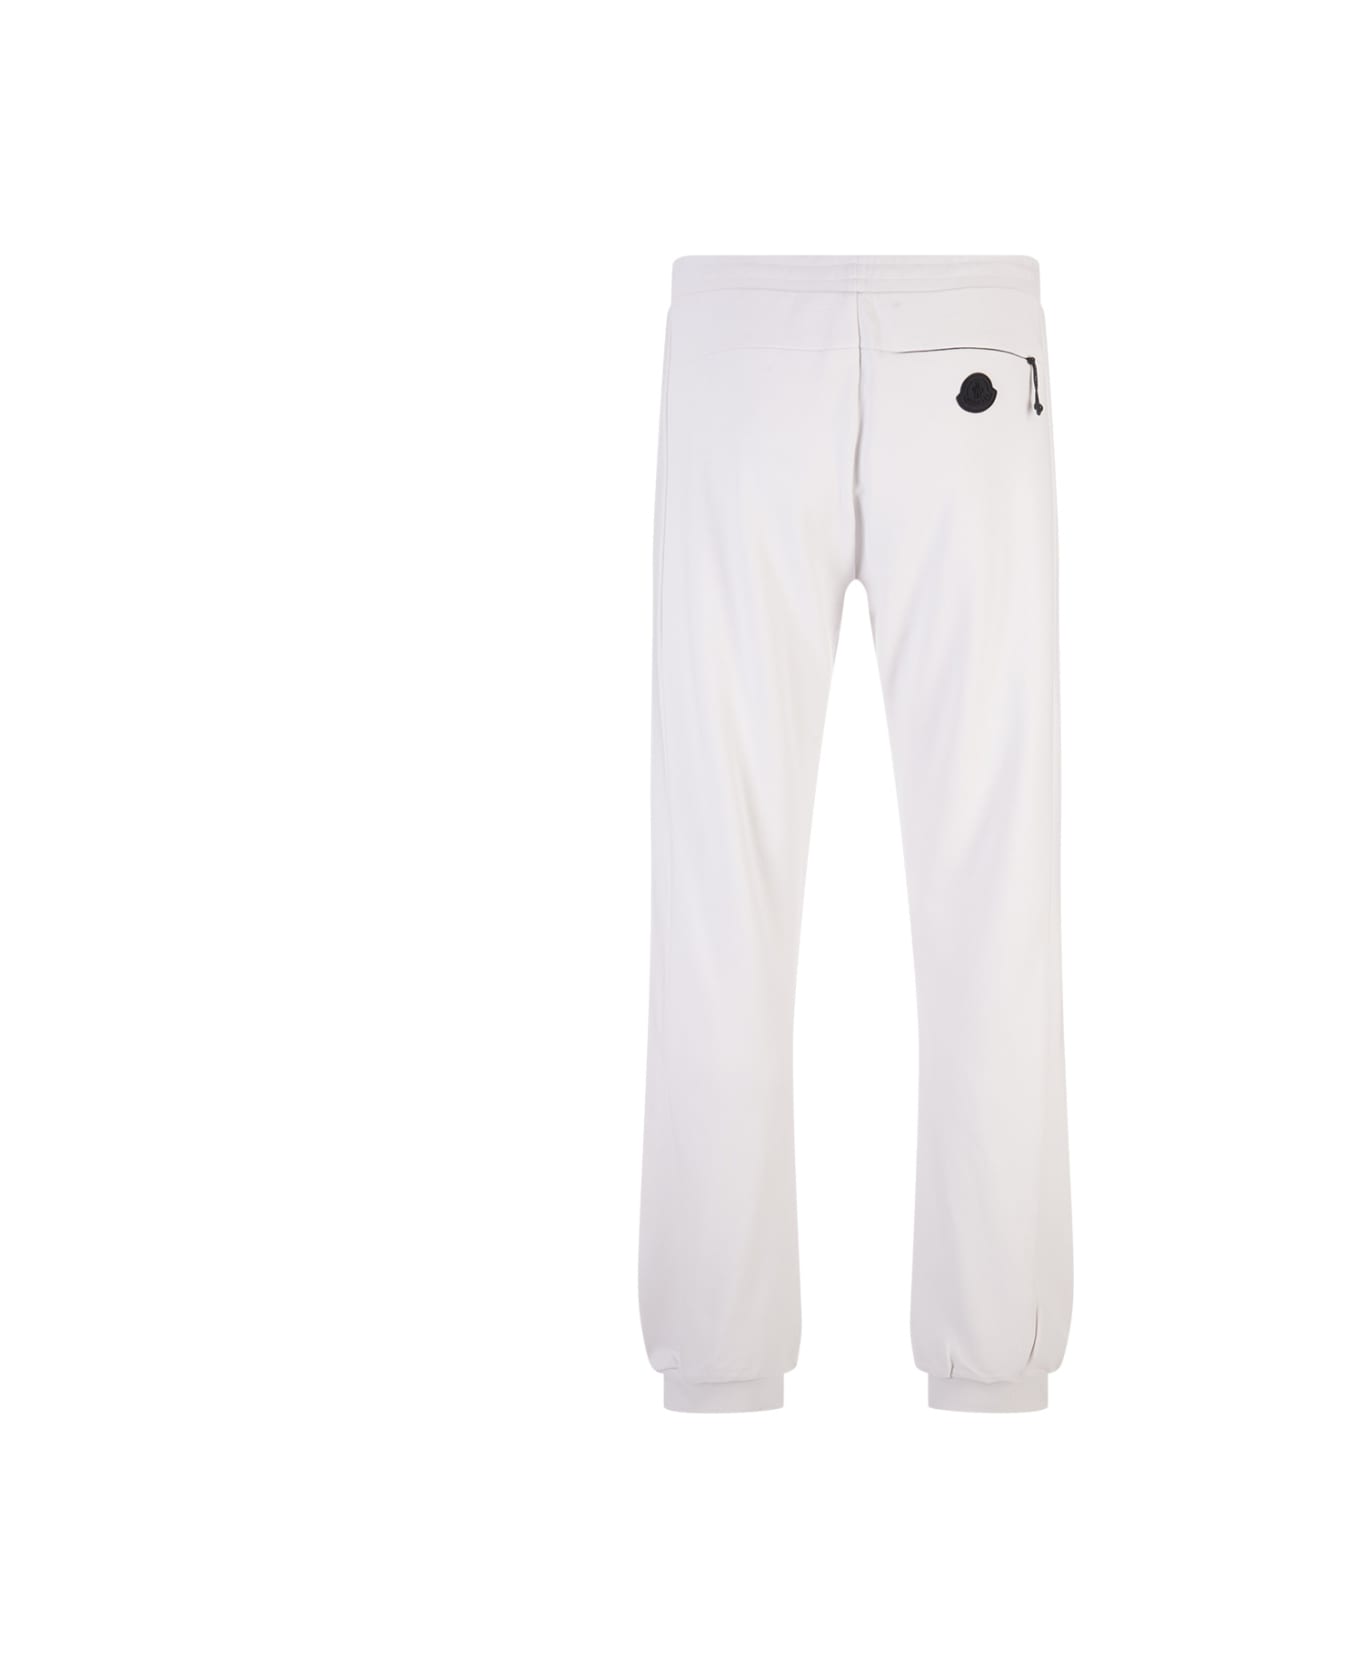 Moncler Logoed White Joggers - Bianco